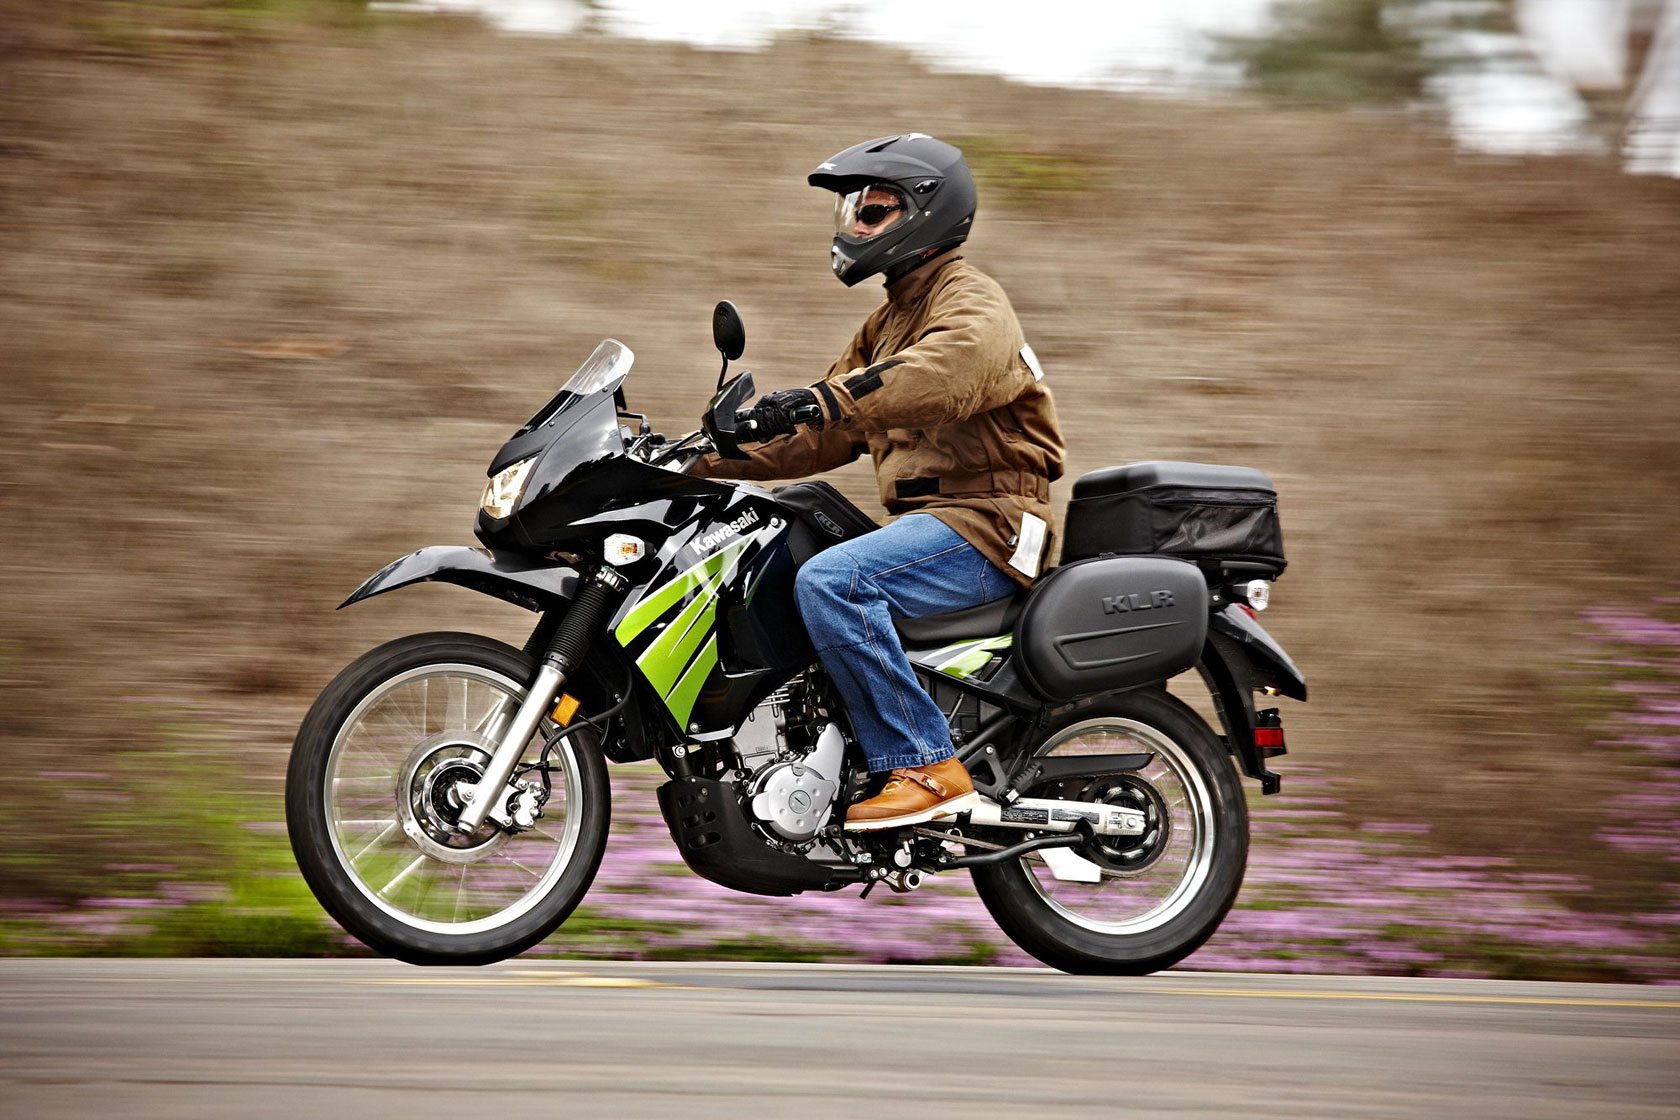 Тест-драйв мотоцикла Kawasaki KLR650